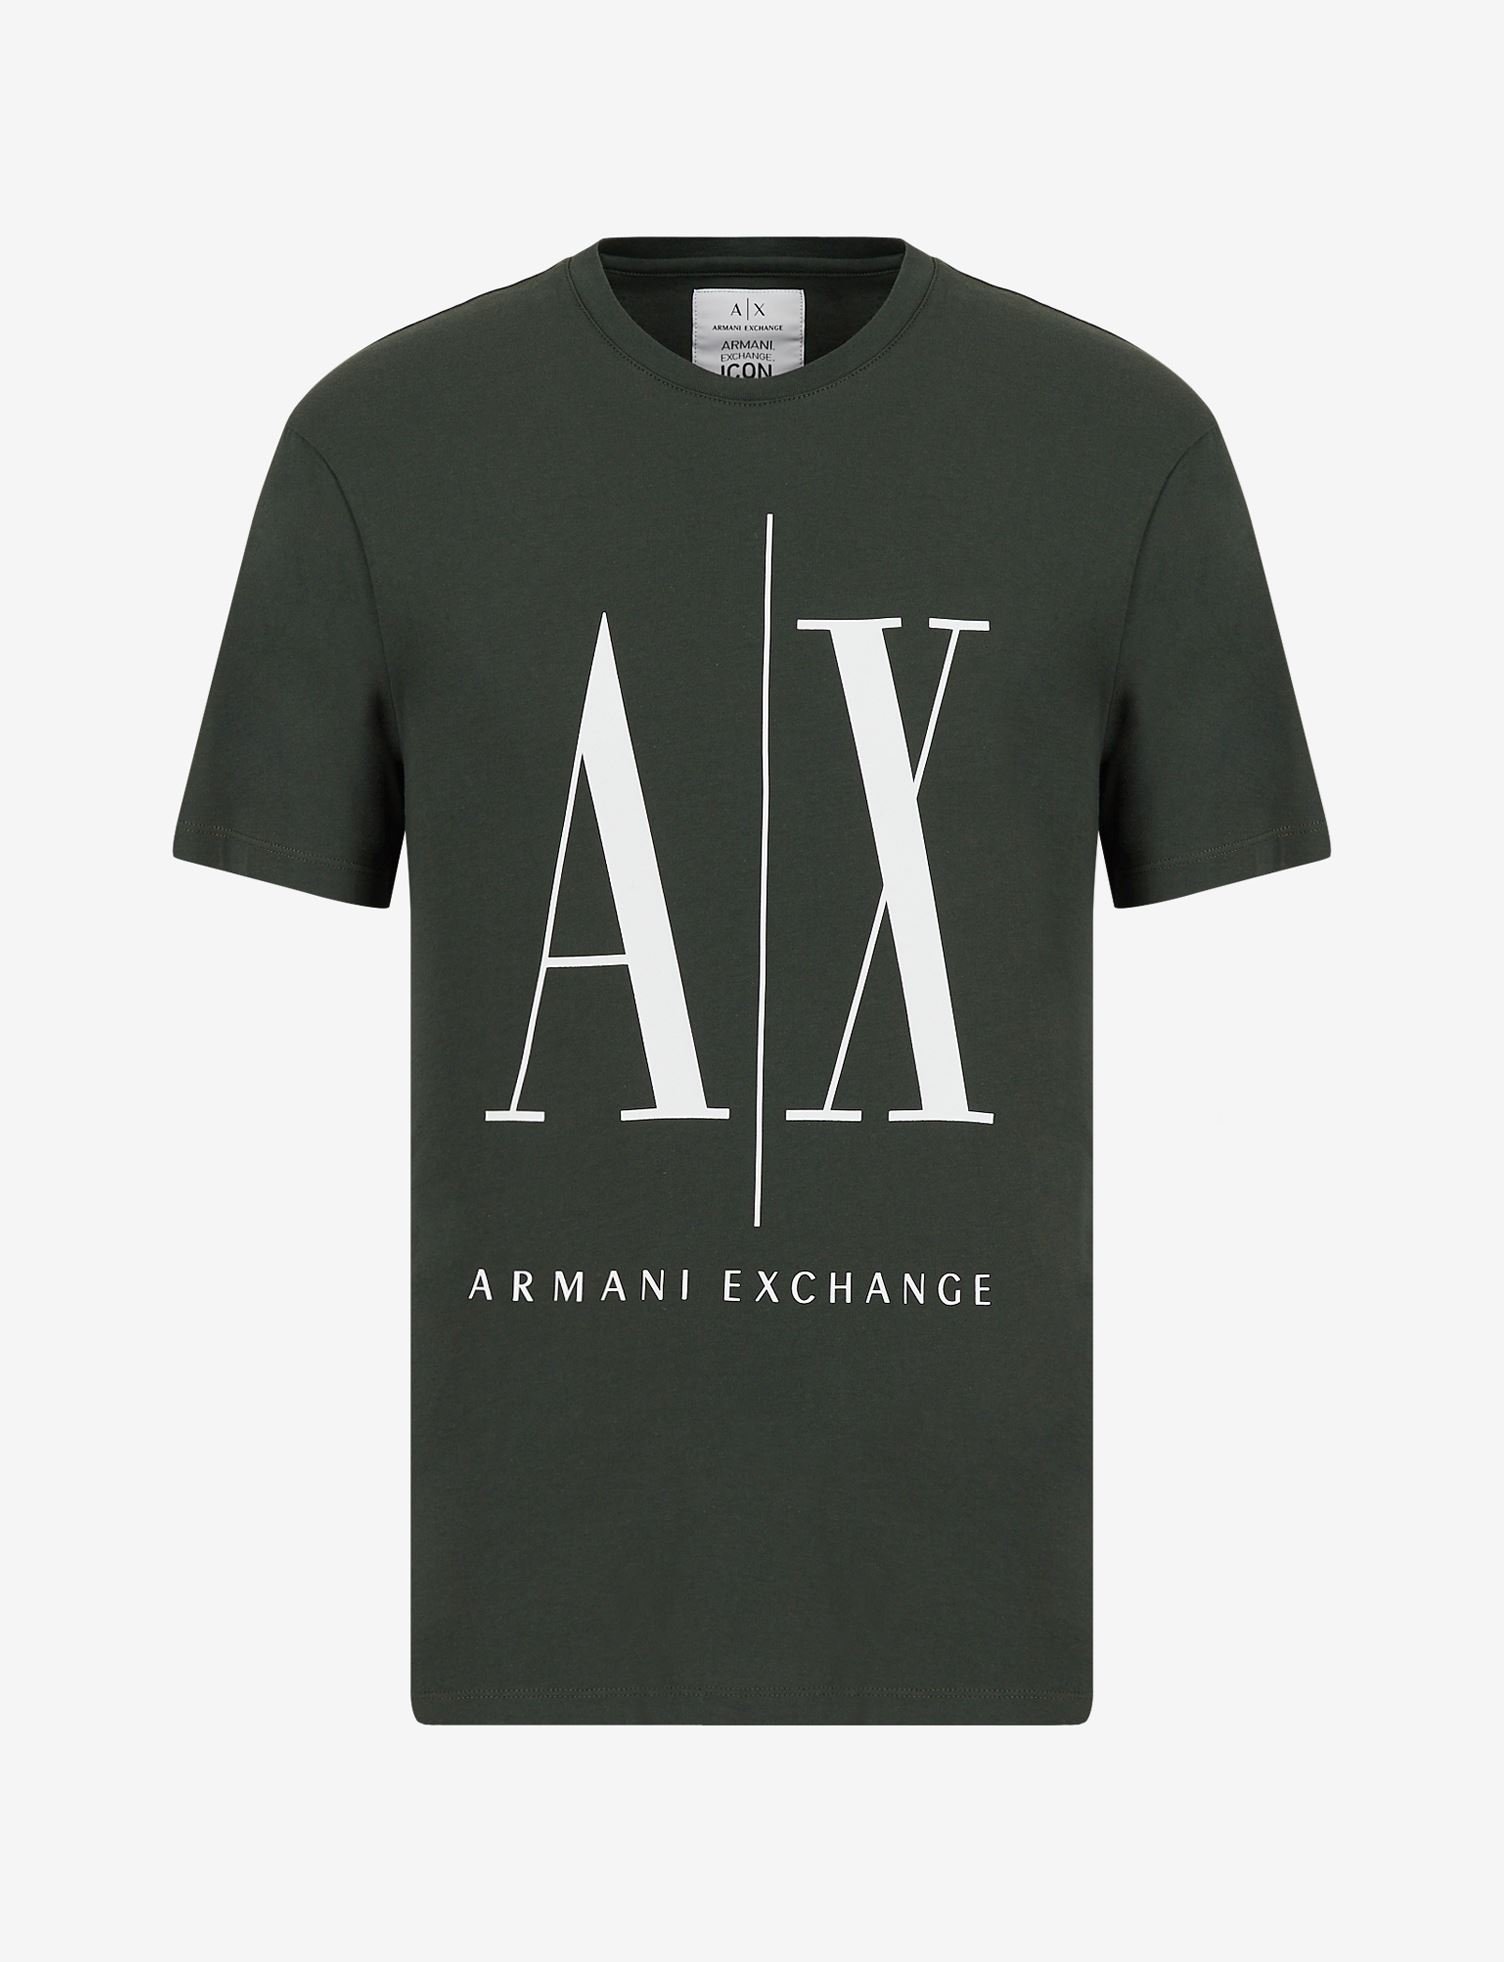 Armani Exchange_Icon Logo T-Shirt_4550_3640.jpeg